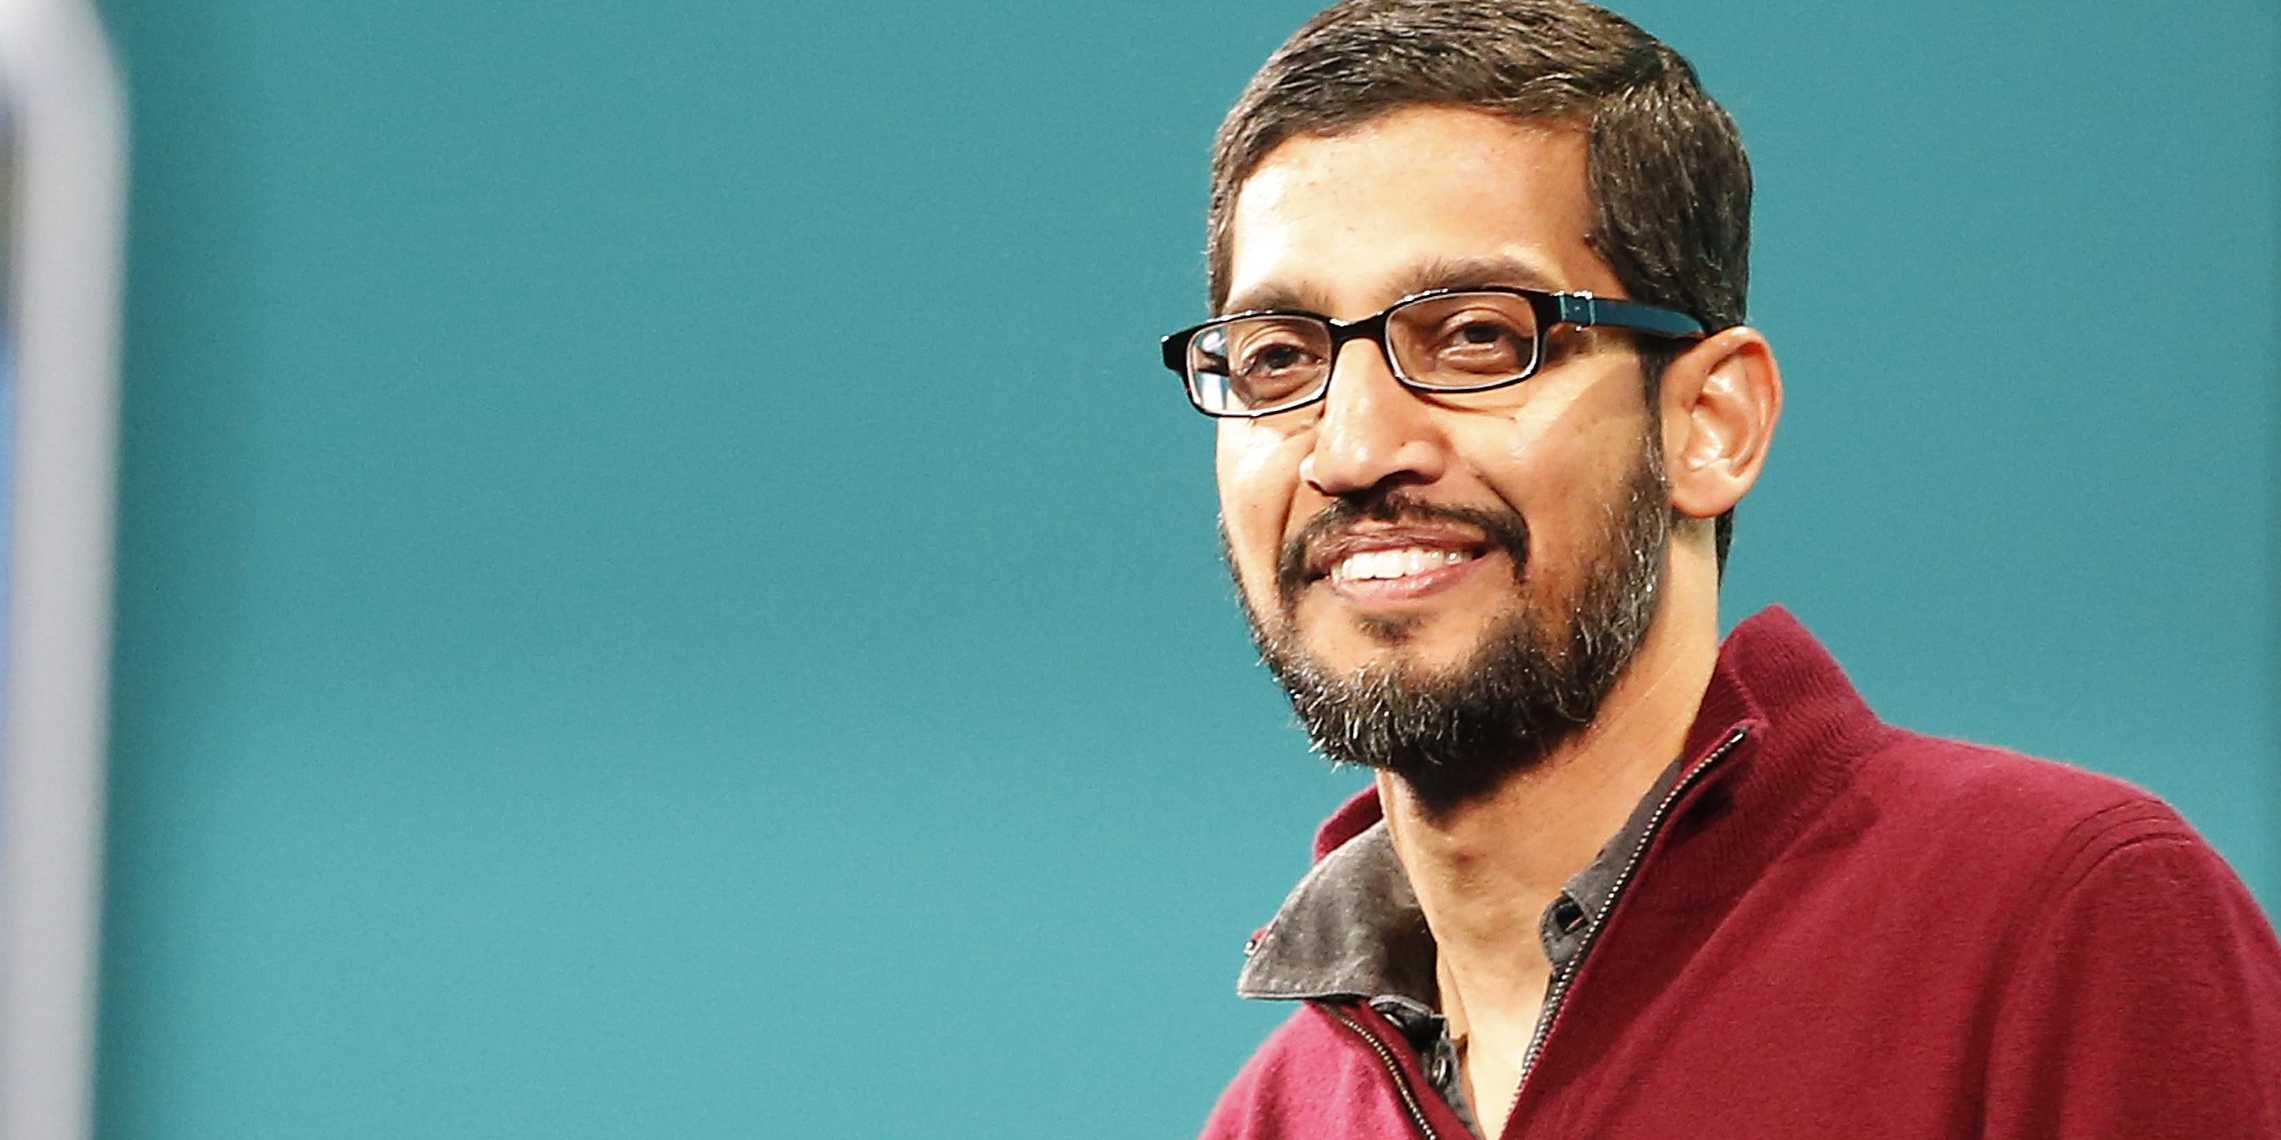 Sundar Pichai Google CEO. Engineer MBA